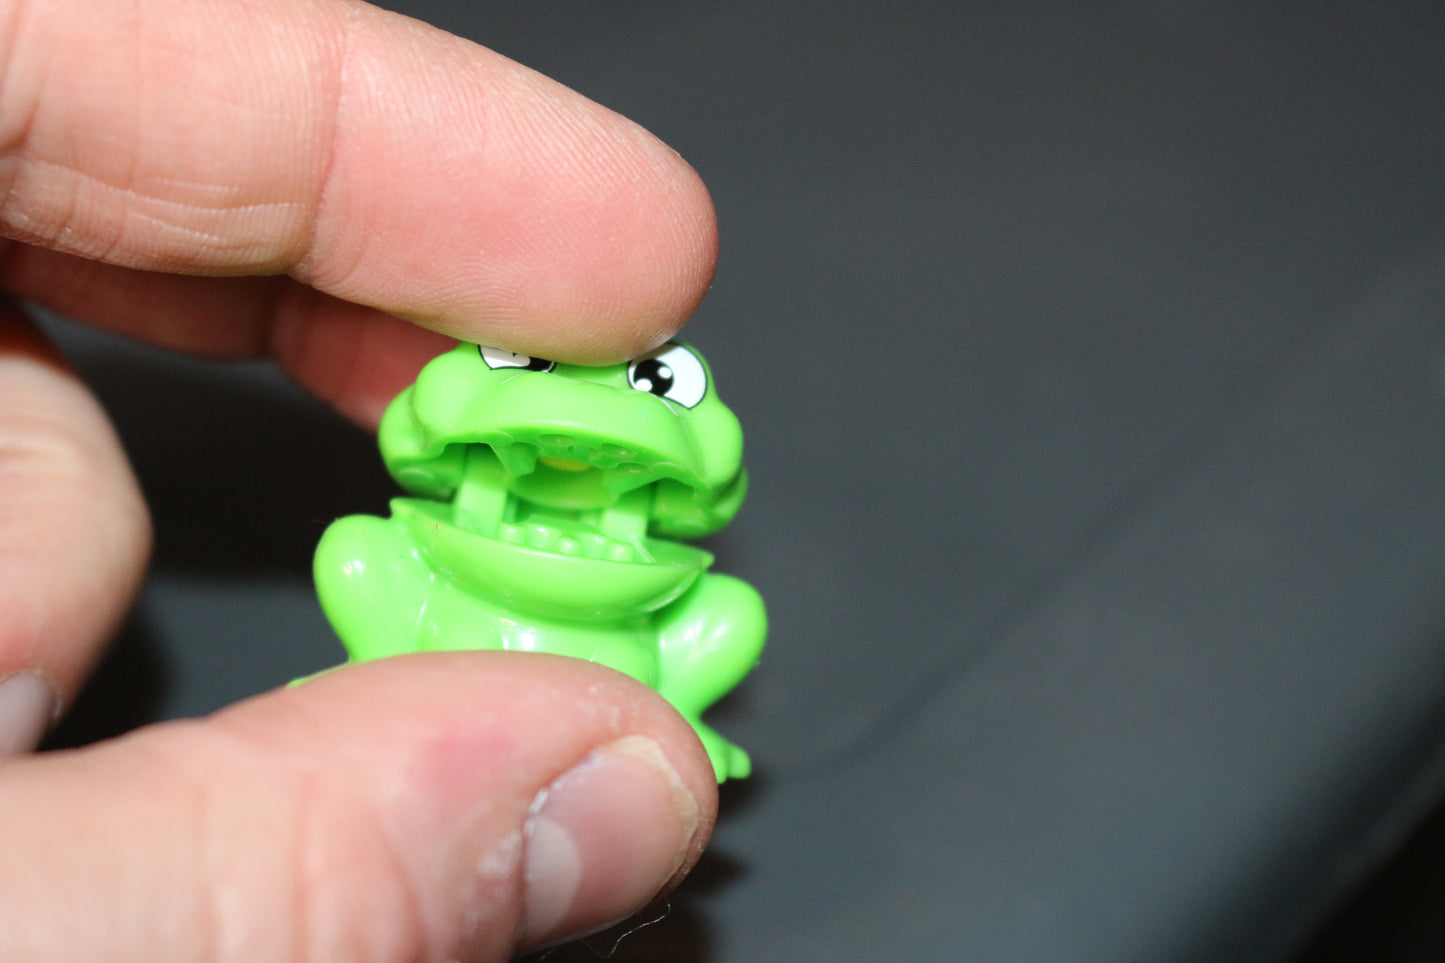 Kinder Surprise Frog Prince Figure Toys King Crown Green Action Figure